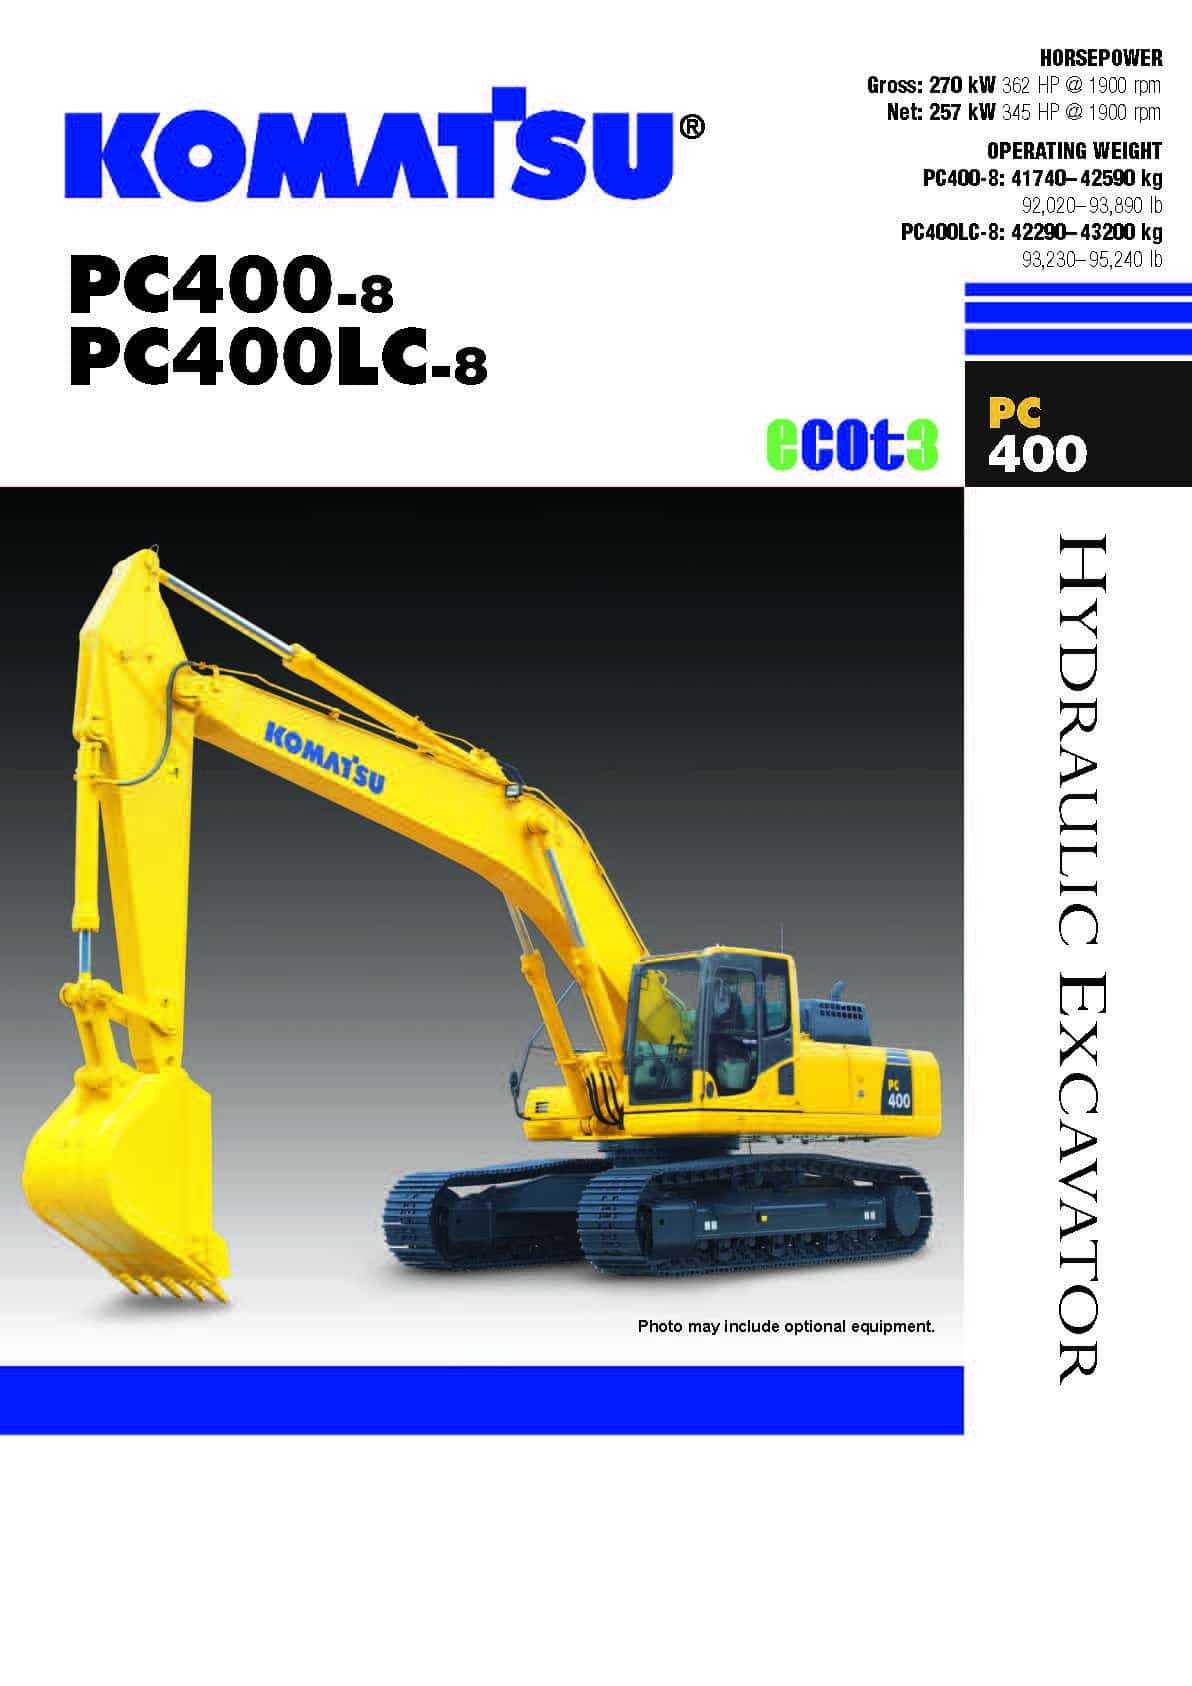 Komatsu Catalogue Specification Sheets Hydraulic Excavator Pc400 8 Pc400lc 8 Service Manual Repair Manual Pdf Download